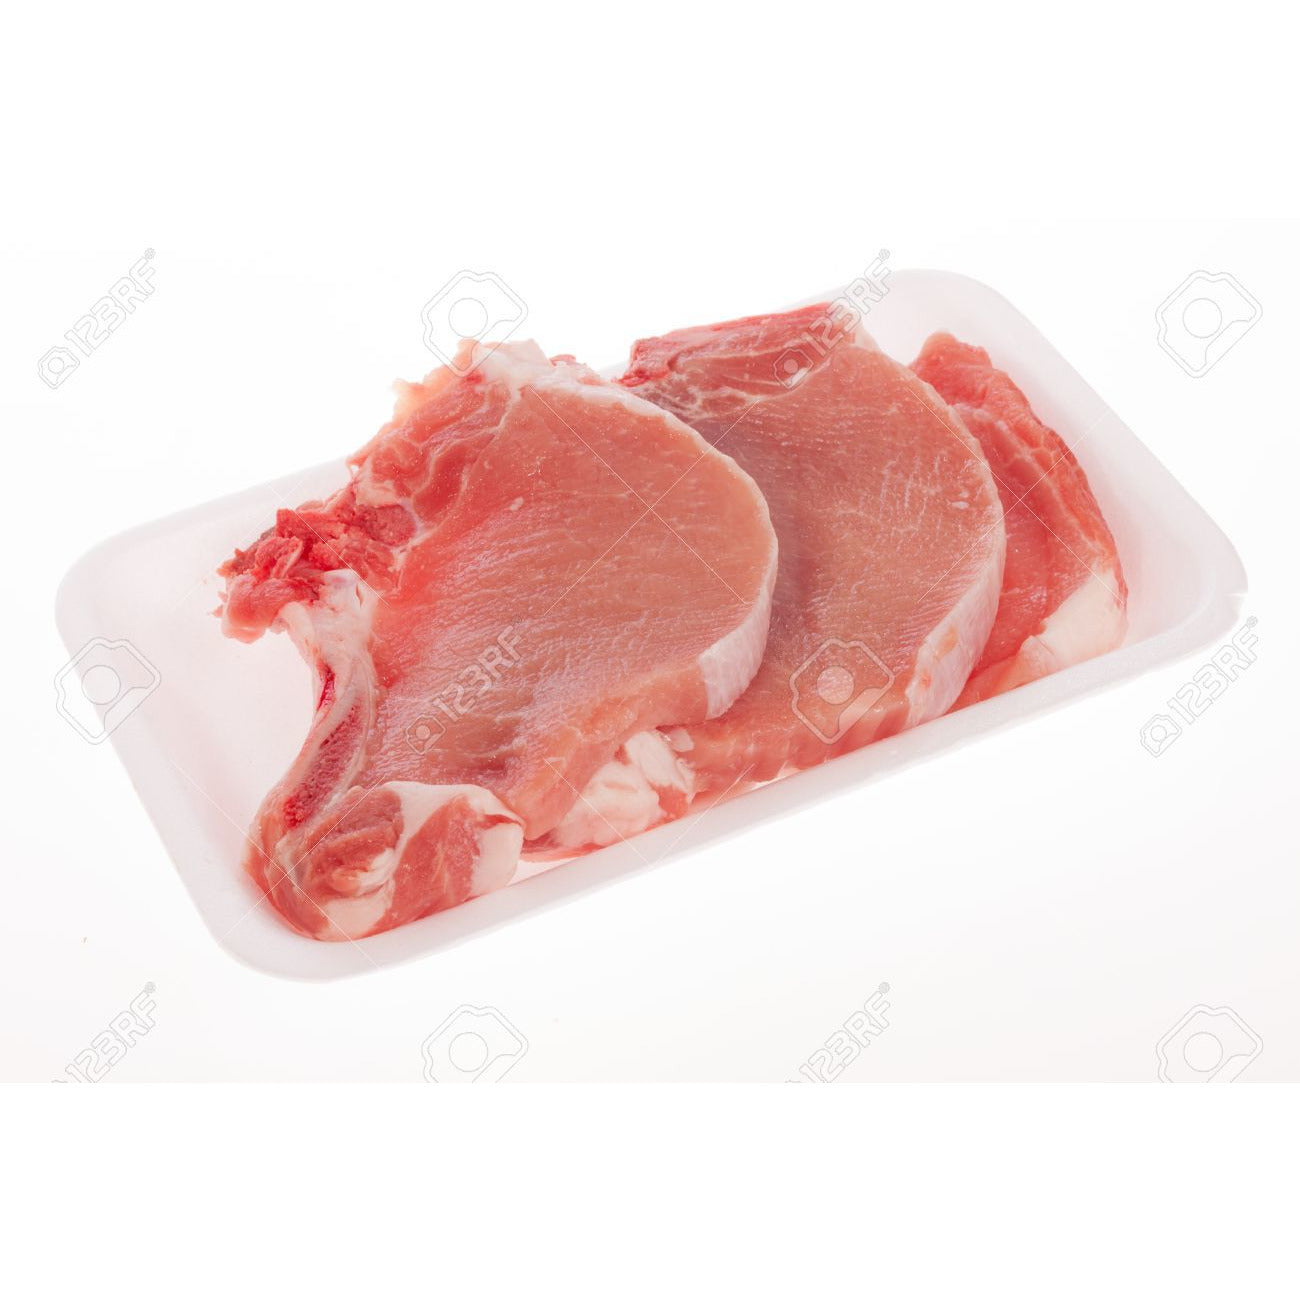 Pork Chop - Bone in [about 1.4 lbs]